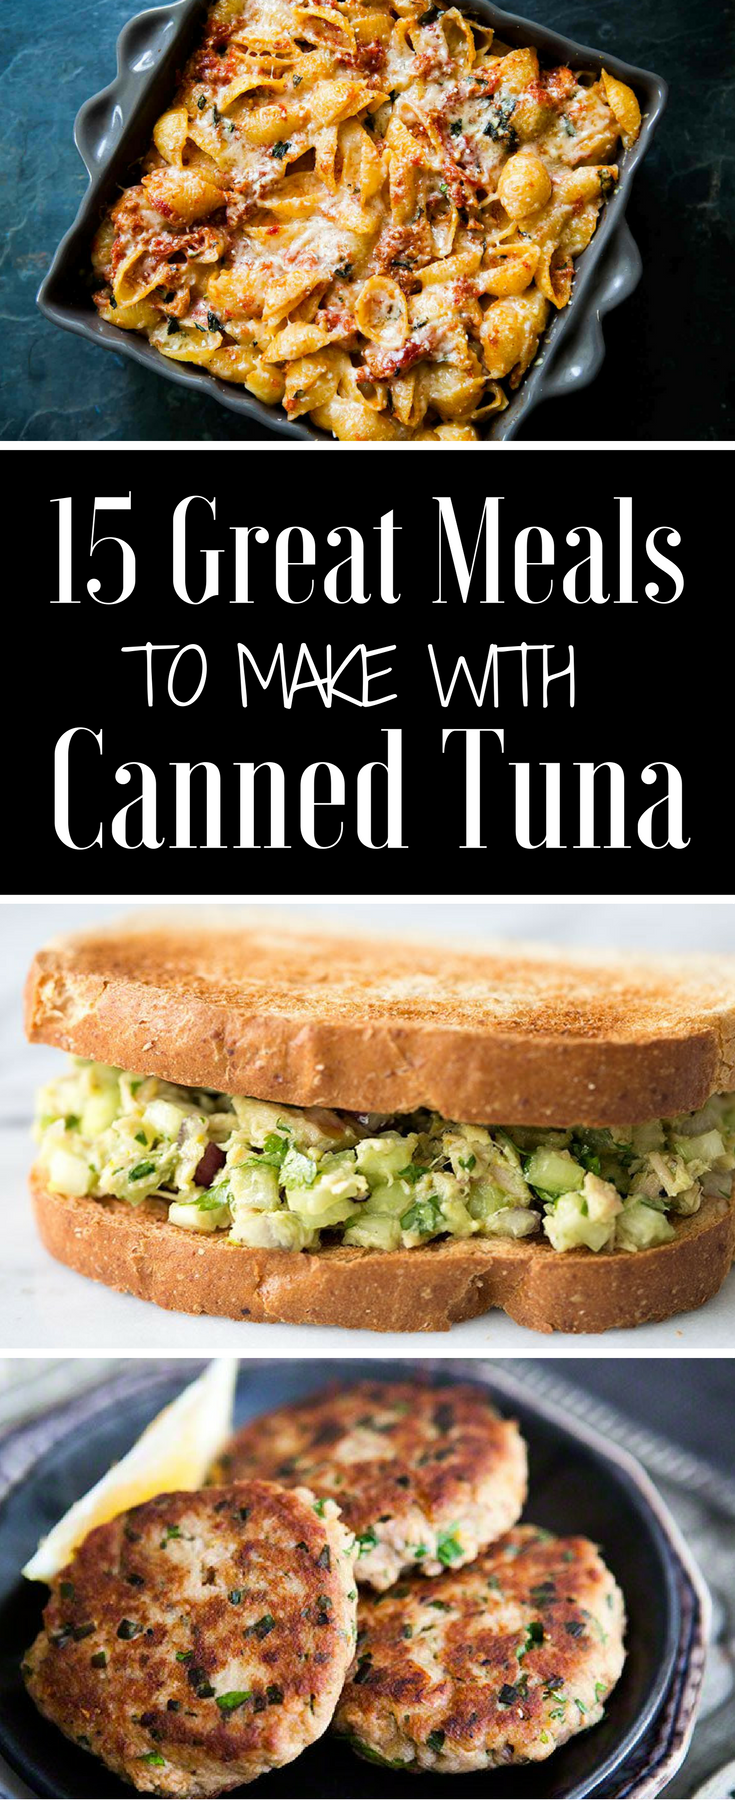 15 awesome recipes for canned tuna! Tuna patties, tuna salad, tuna pasta, and more!